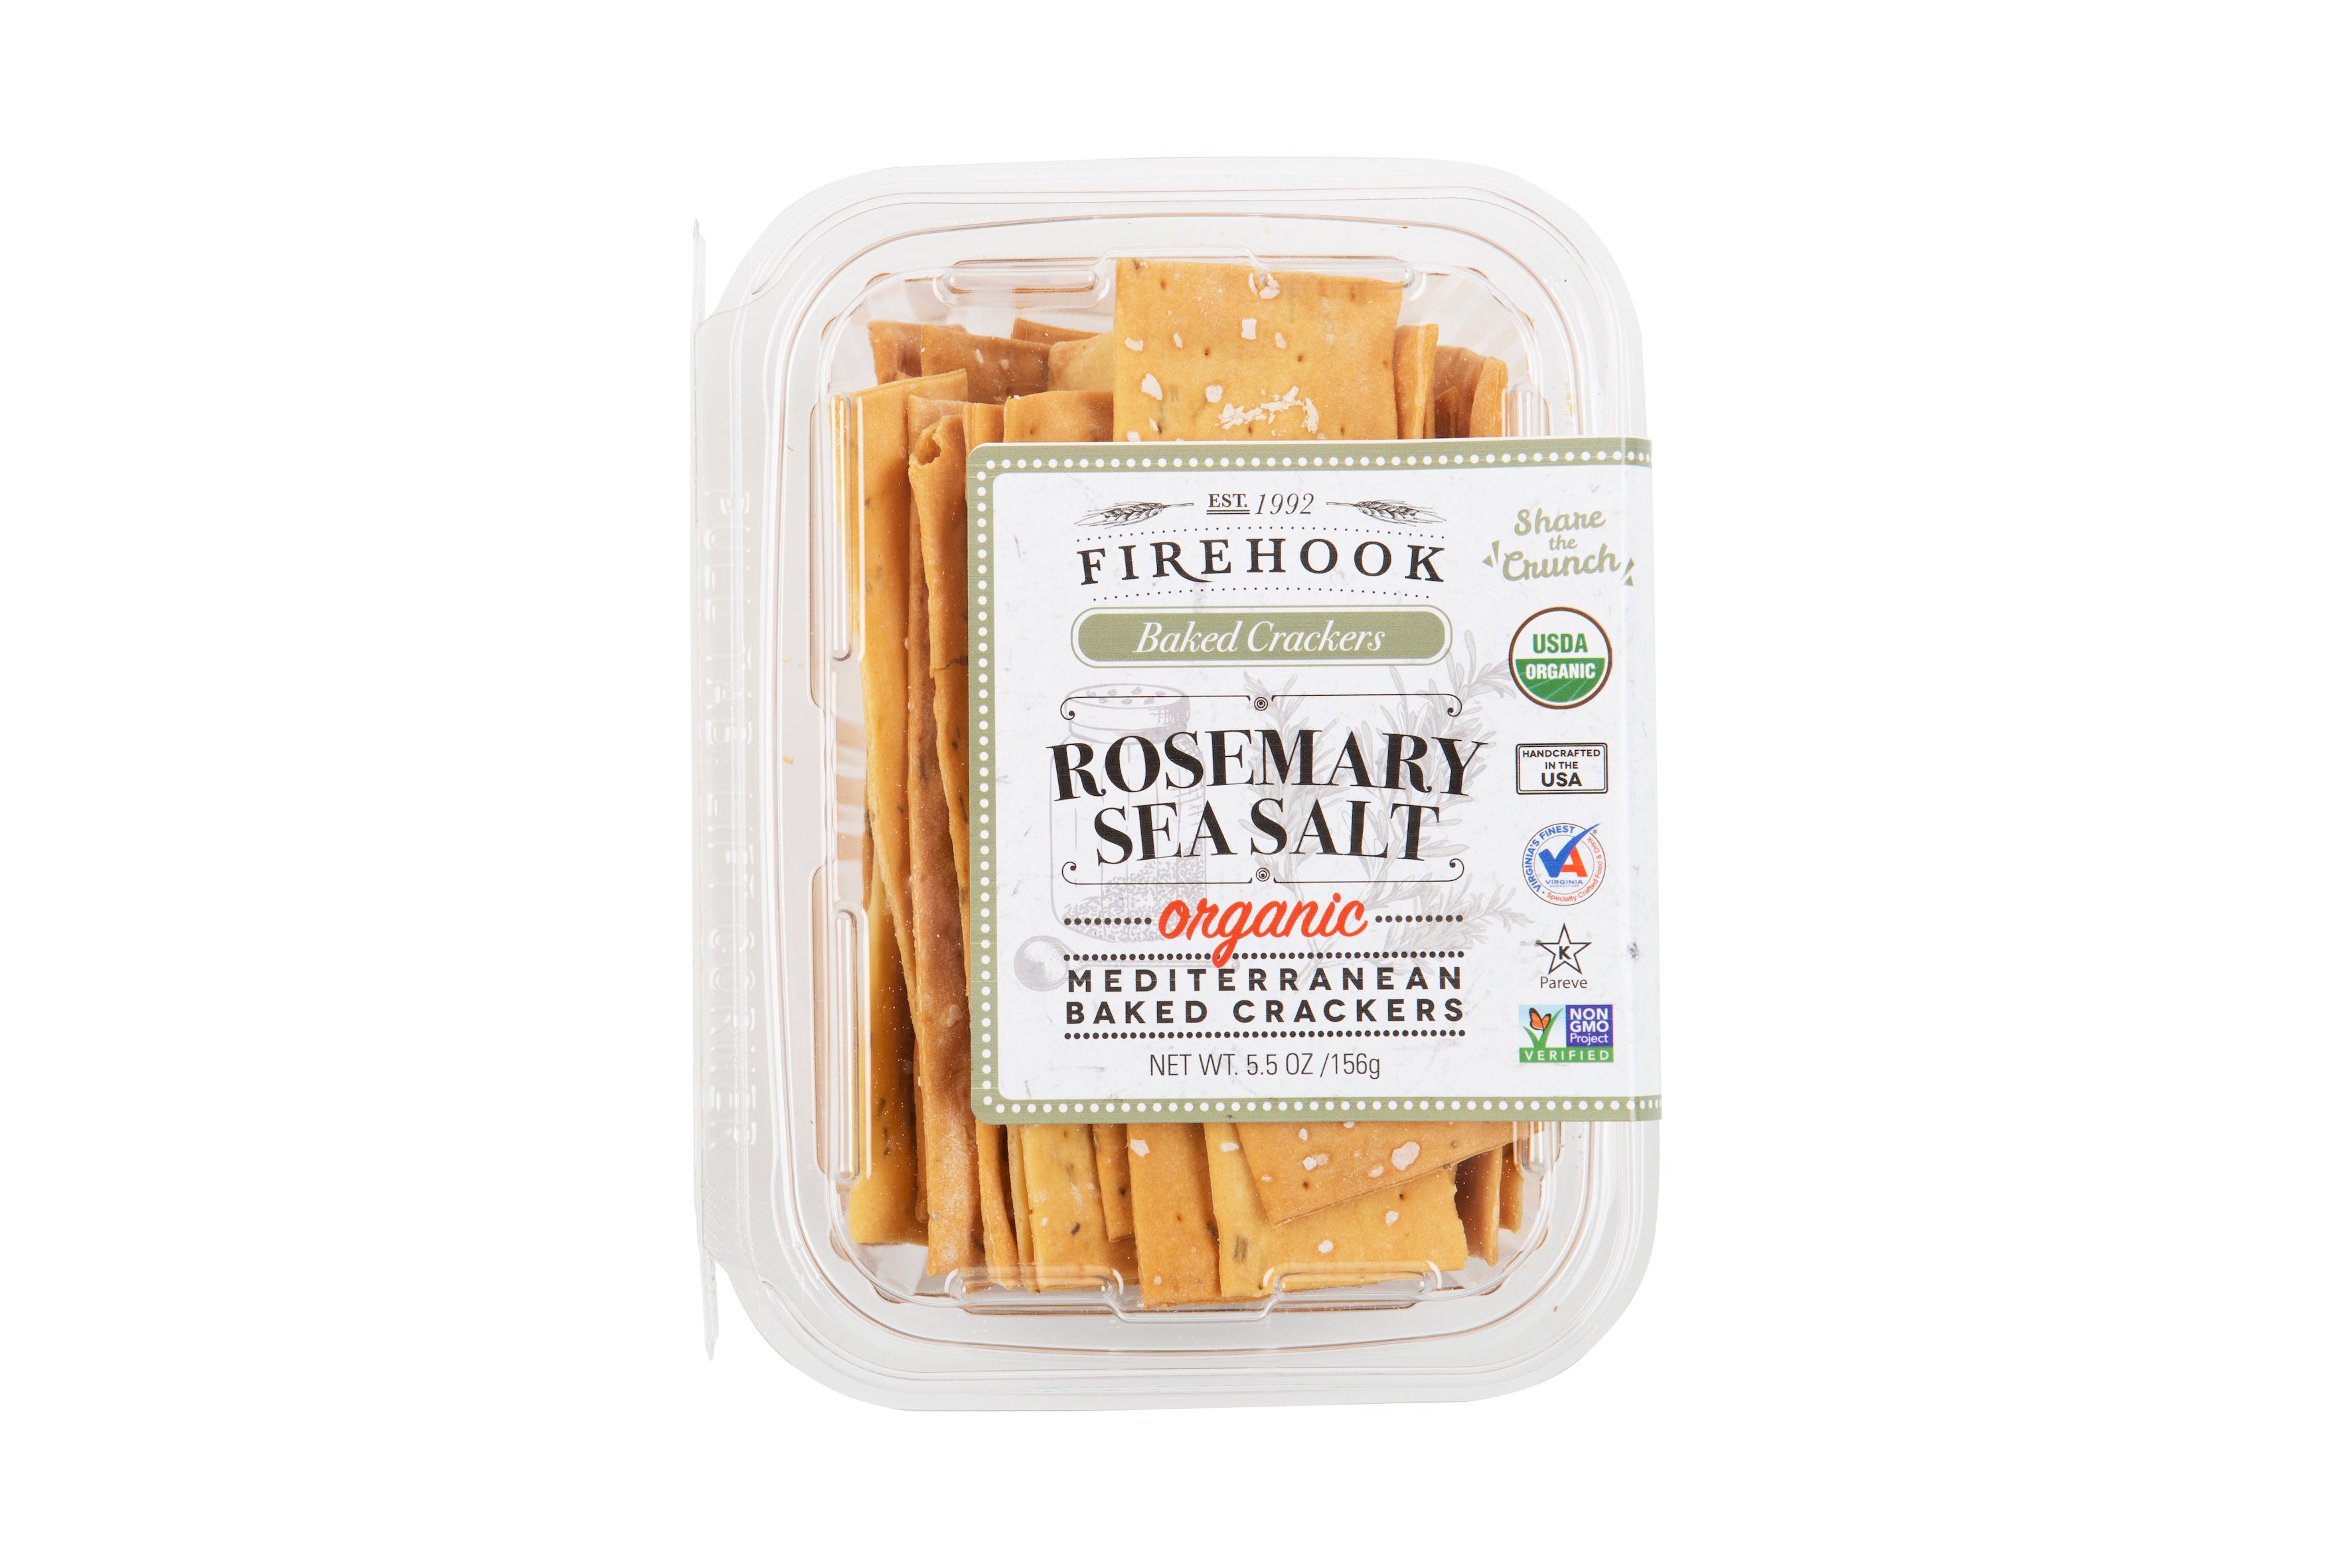 Firehook Mediterranean Baked Crackers - Rosemary Sea Salt